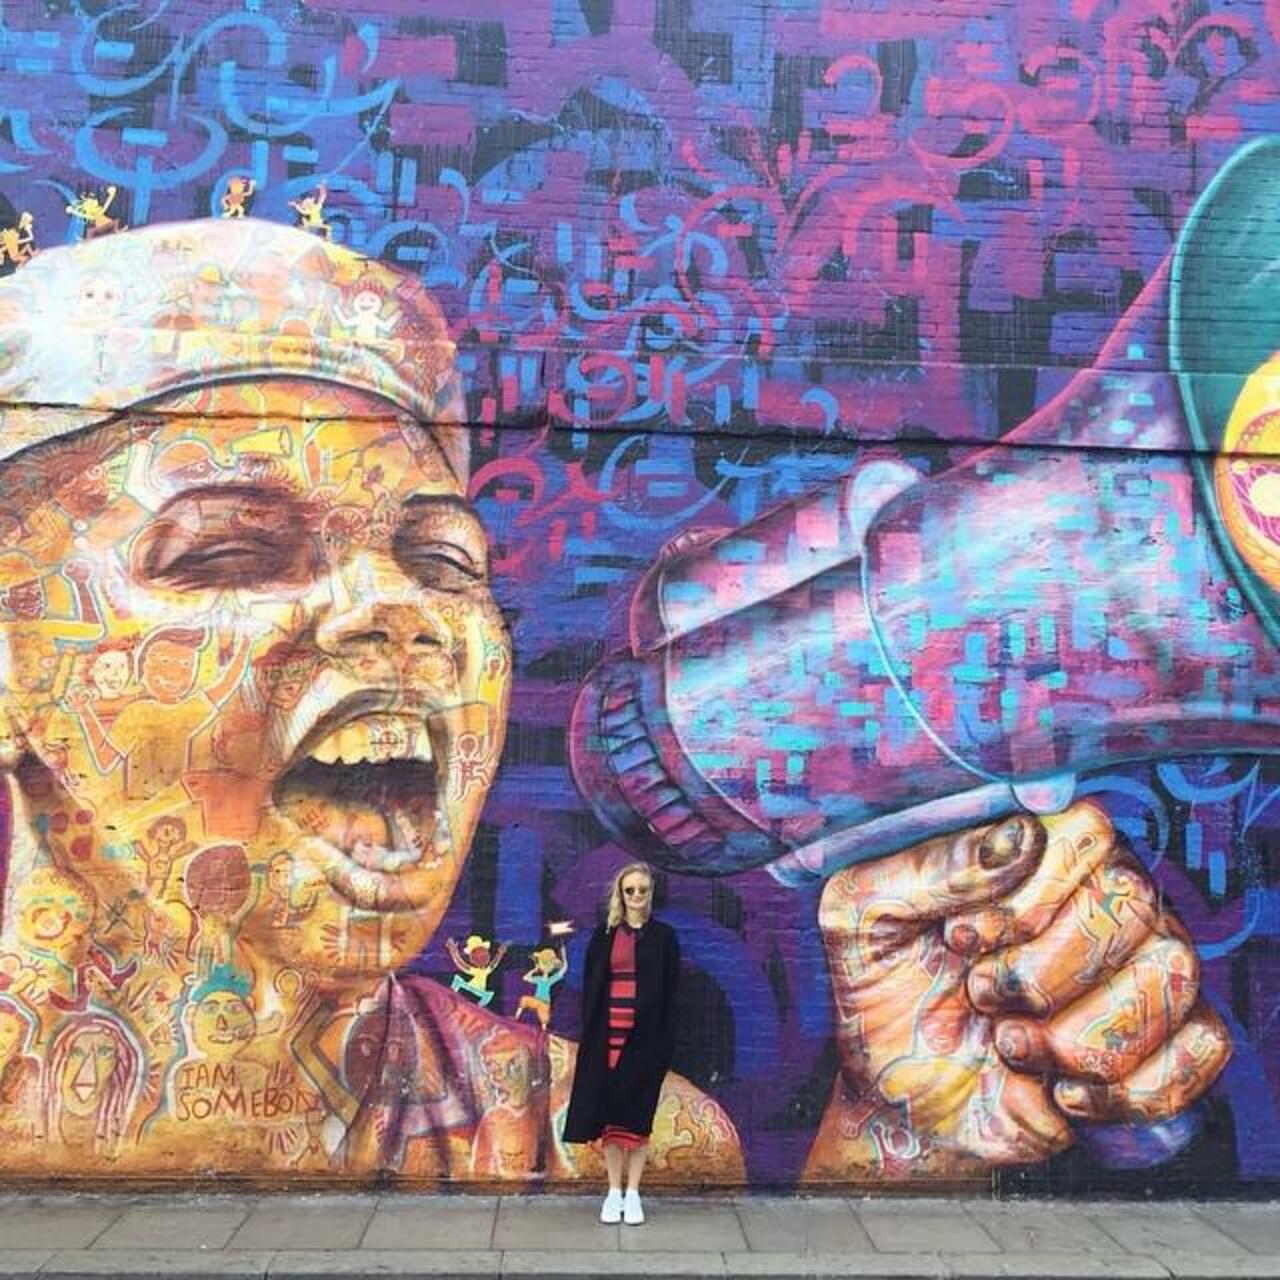 Stunning wall by @joelartista raising awareness for the rights of street youth worldwide #streetart #graffiti #joel… http://t.co/txlg8VQQTj